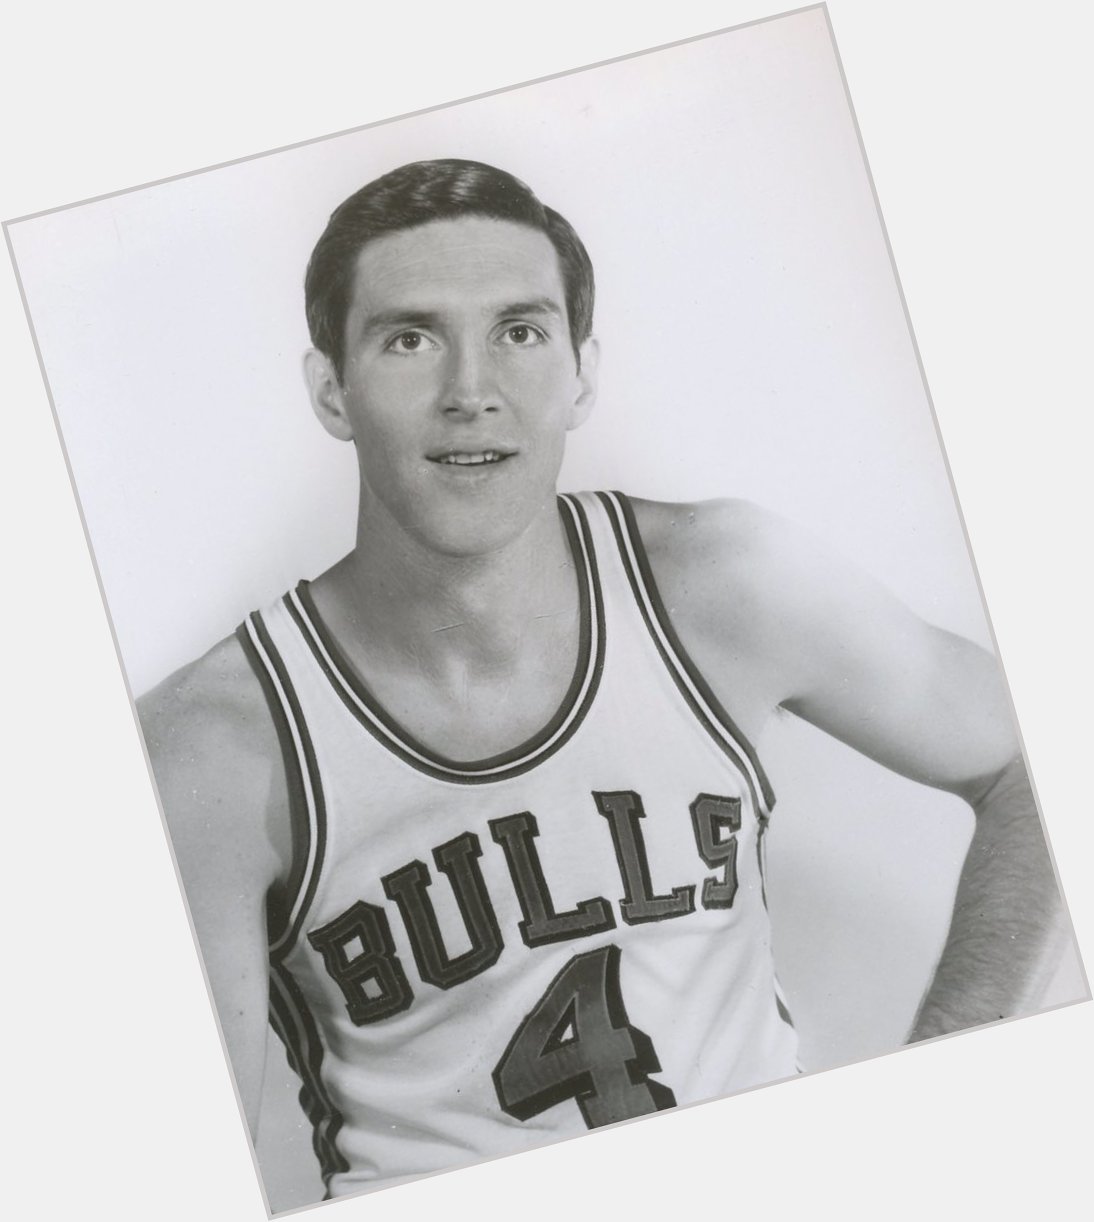 Happy birthday to my favorite Bull, Jerry Sloan! 